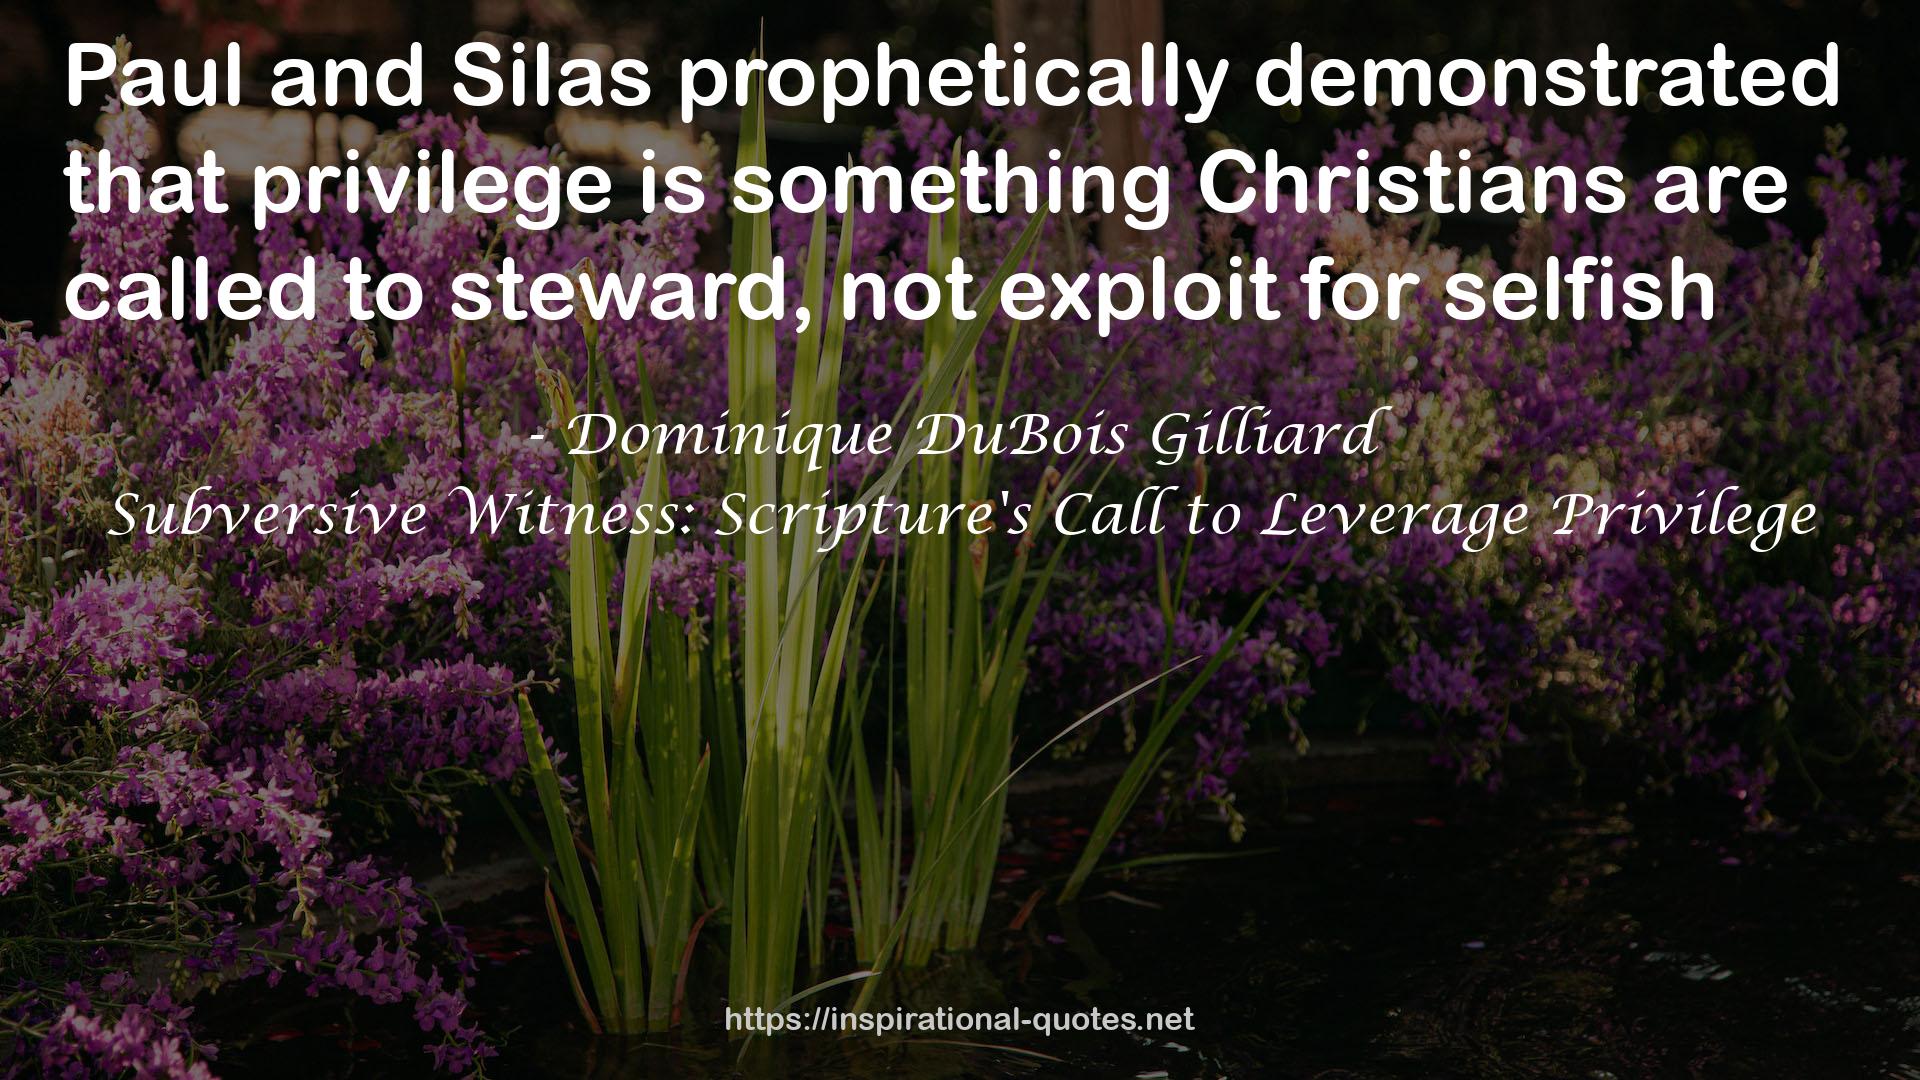 Subversive Witness: Scripture's Call to Leverage Privilege QUOTES